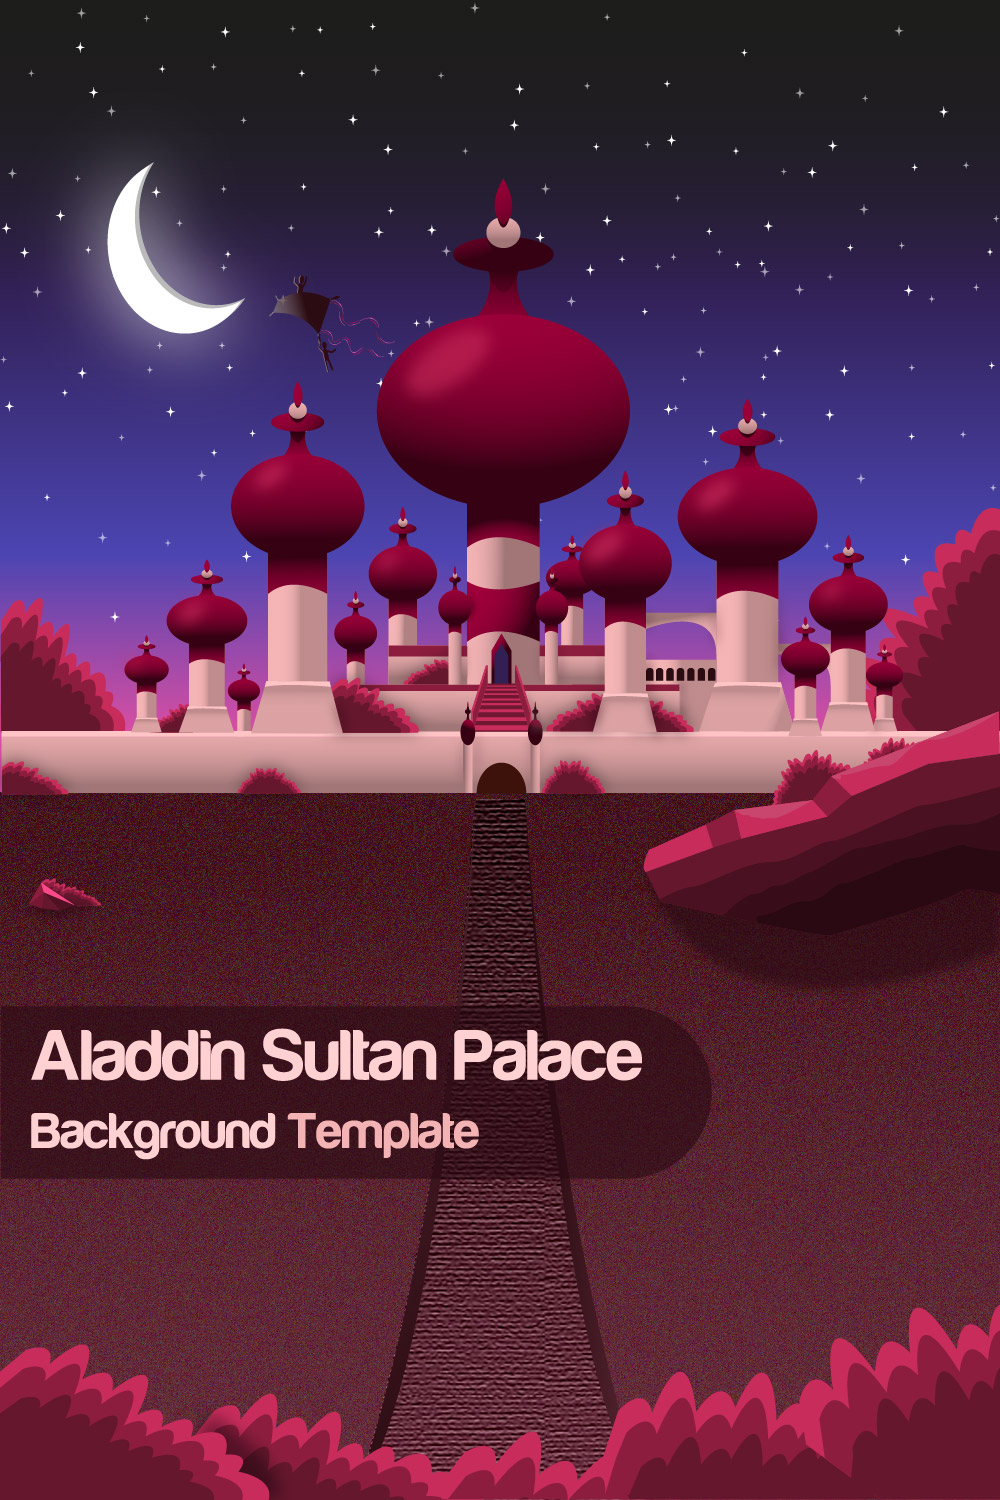 Aladdin Sultan Palace Background Template pinterest image.